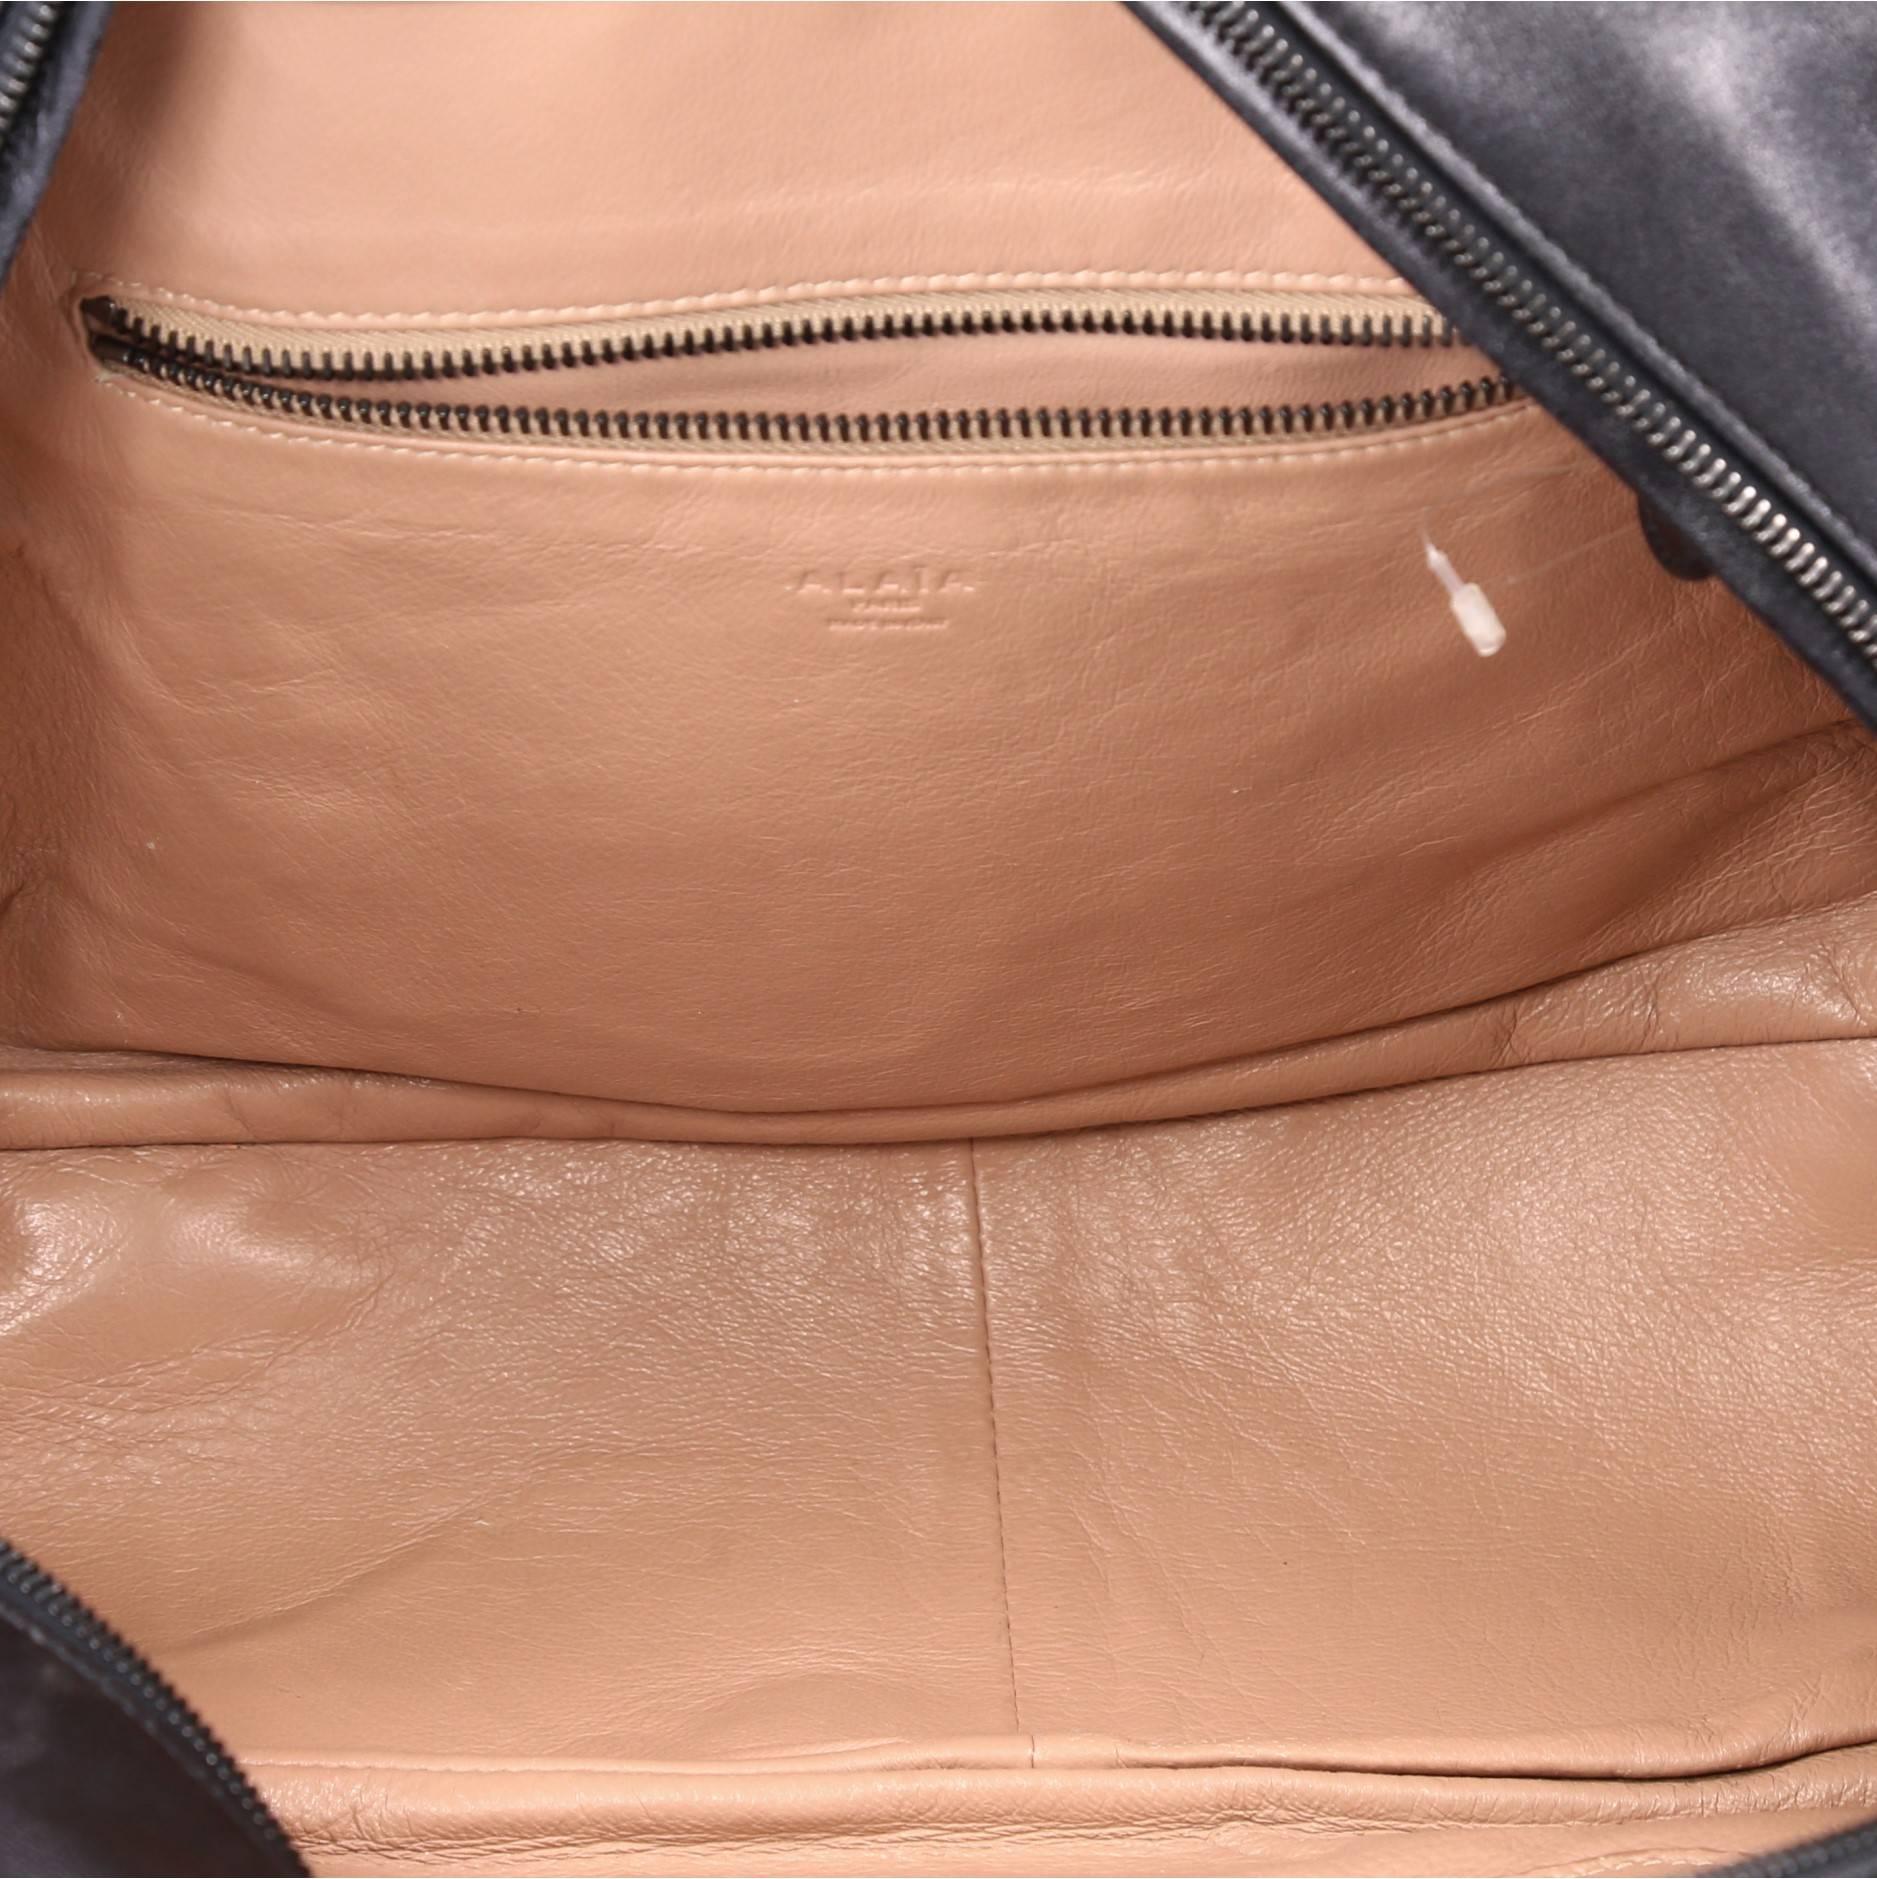  Alaia Duffle Bag Studded Leather Medium 4